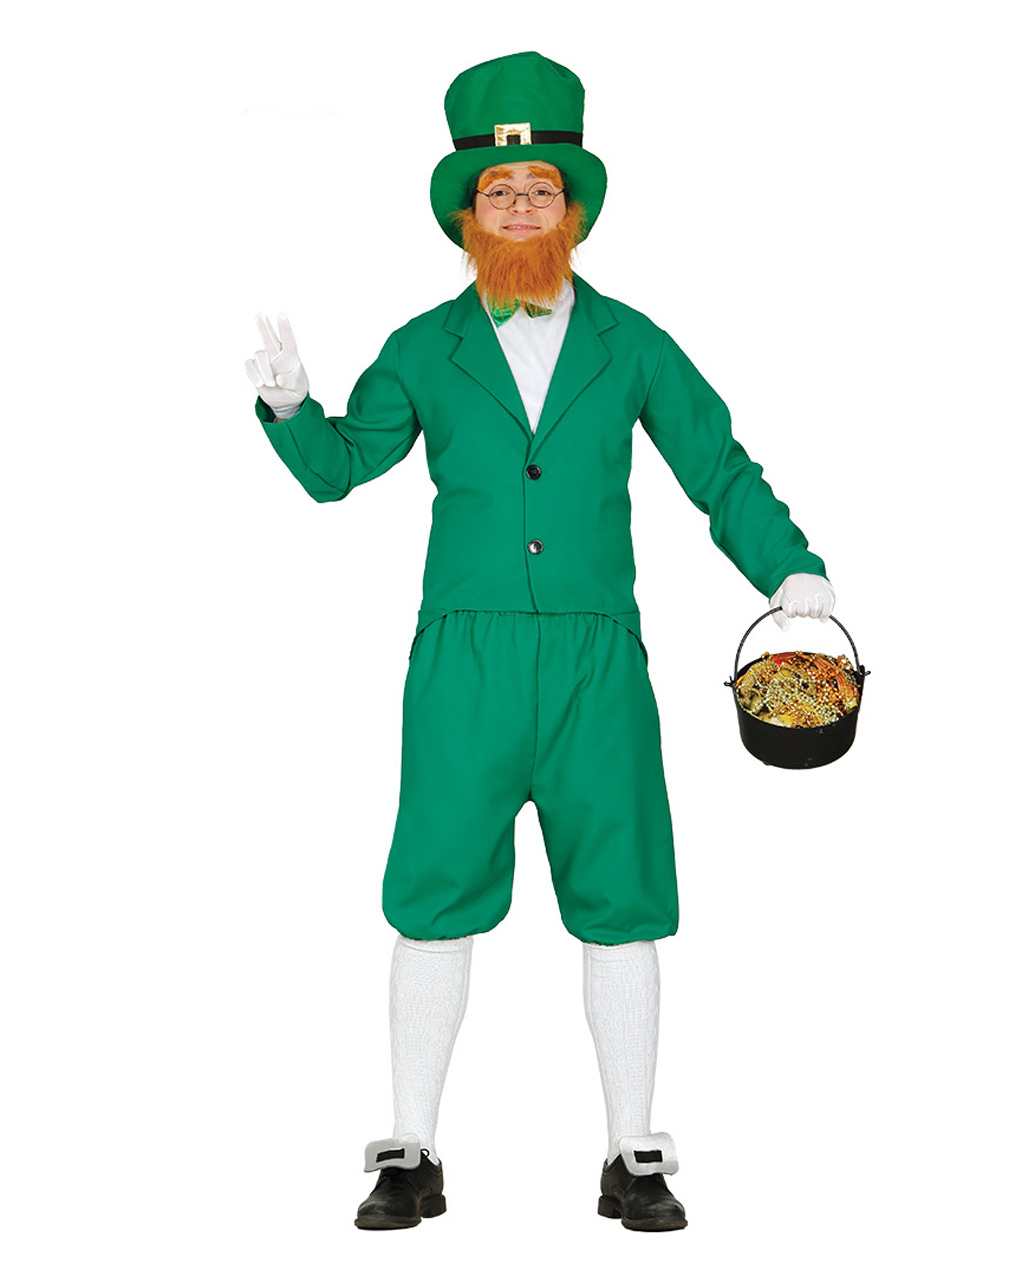 Irish Goblin Costume ☘️ for St. Patrick's Day | horror-shop.com